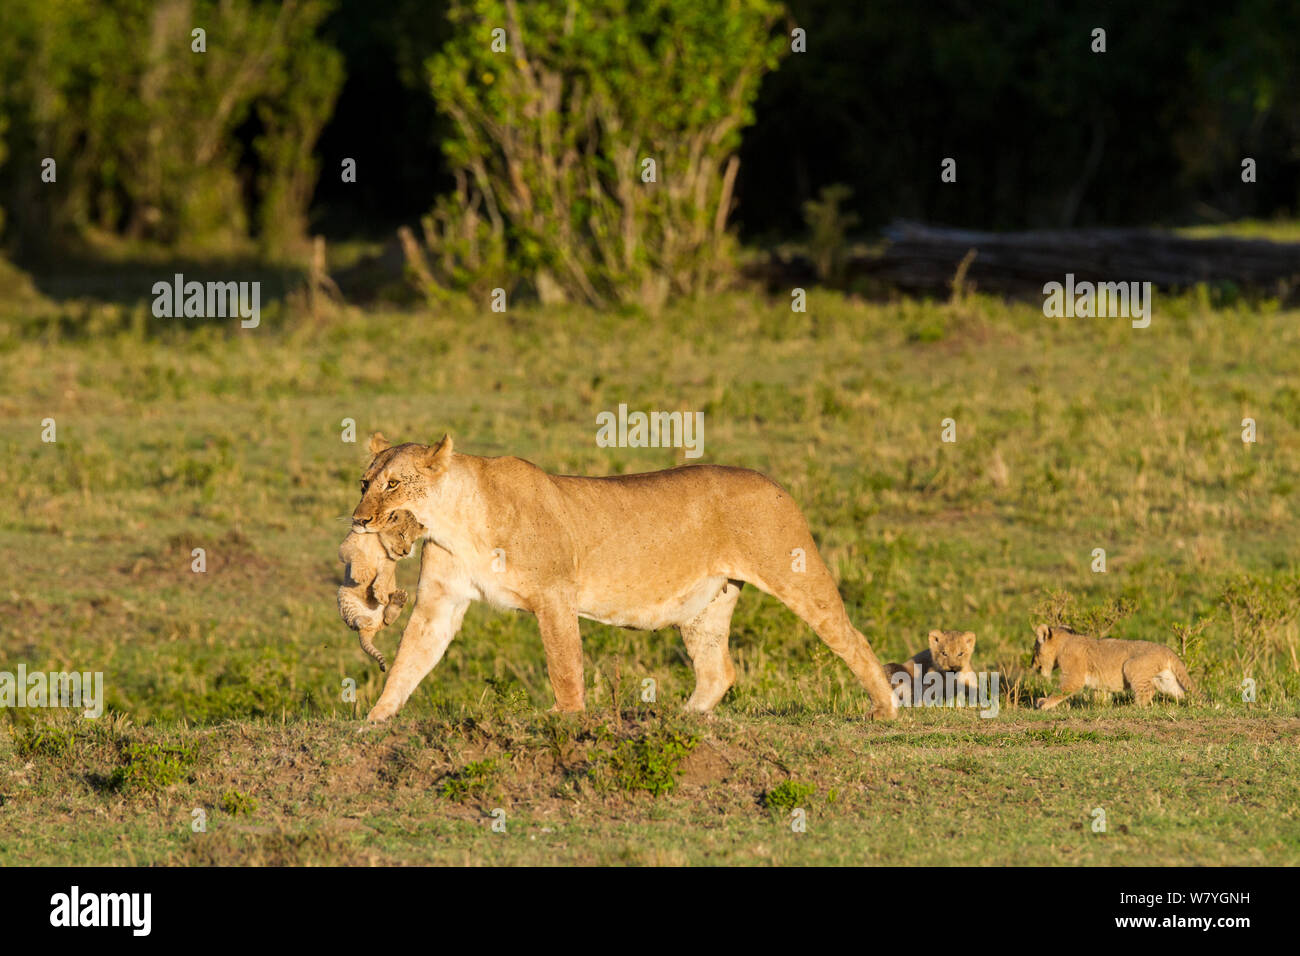 Lioness (Panthera leo) cub, réserve Masai Mara, Kenya, septembre. Banque D'Images